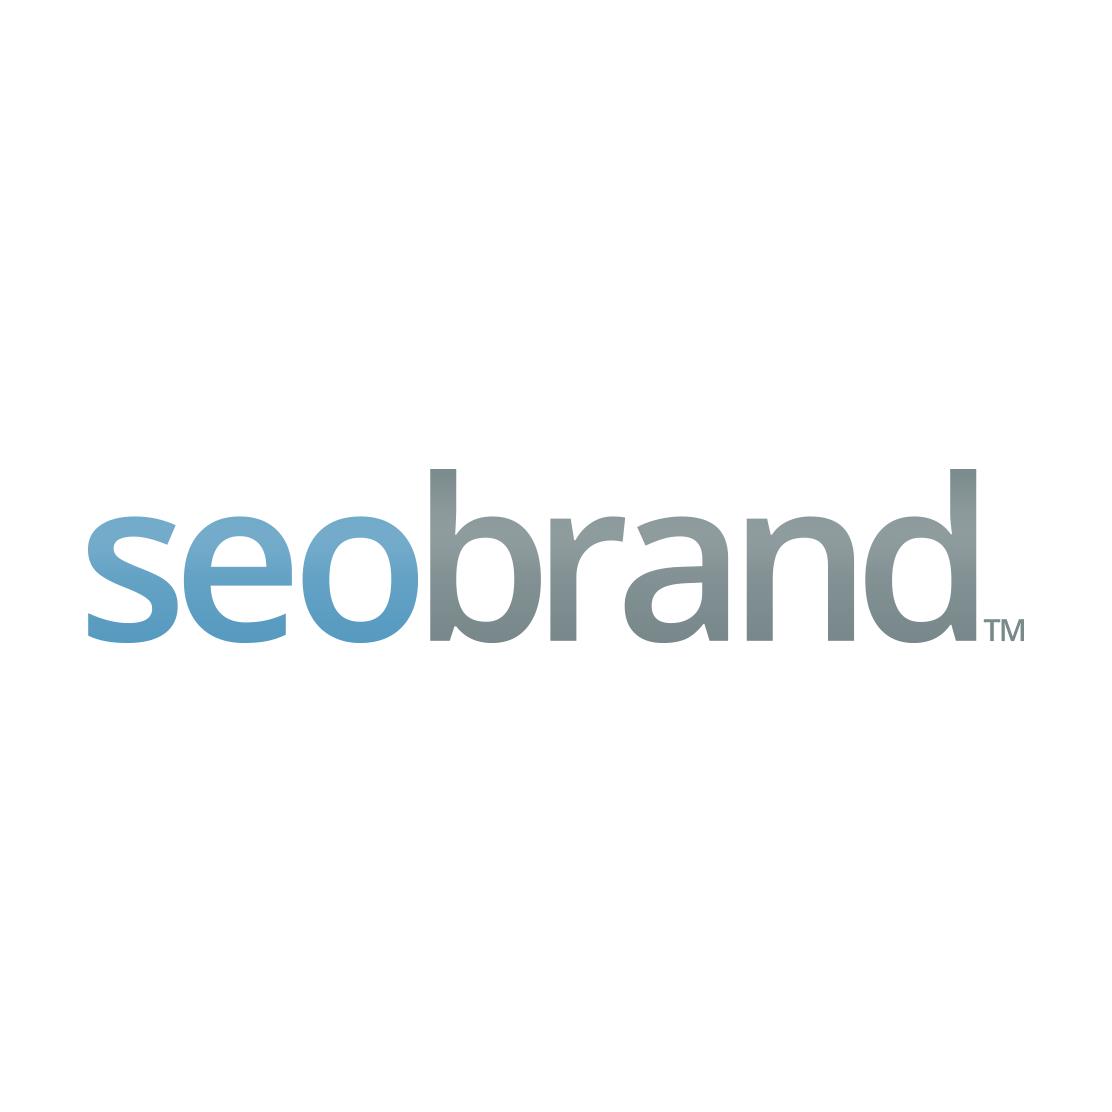 Top Philadelphia SEO Company Logo: SEO Brand